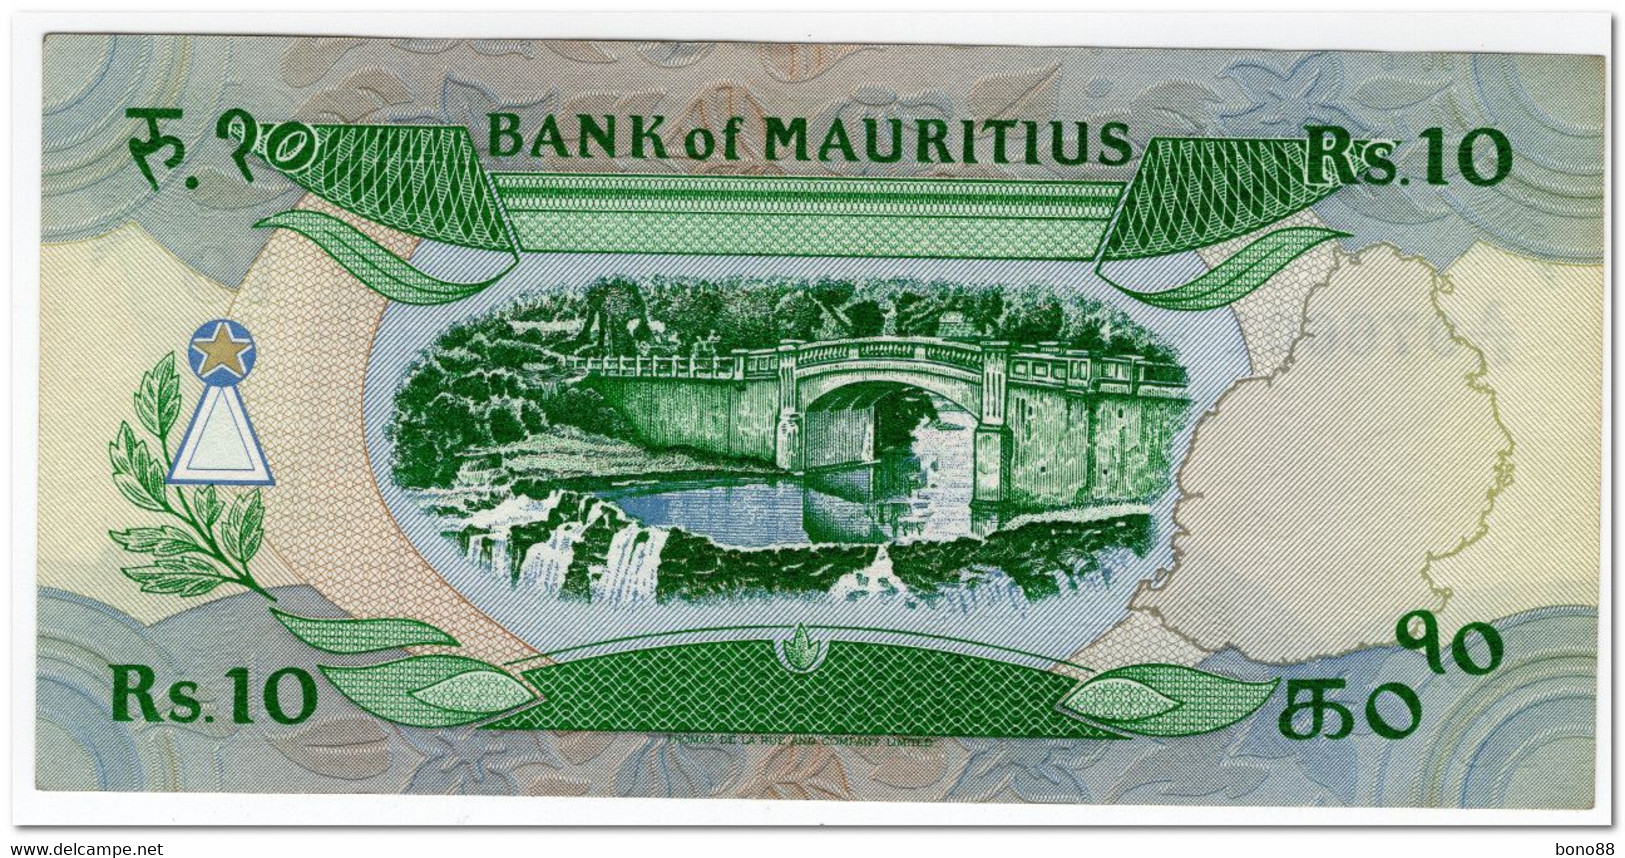 MAURITIUS,10 RUPEE,1985,P.34,XF+ - Mauritius